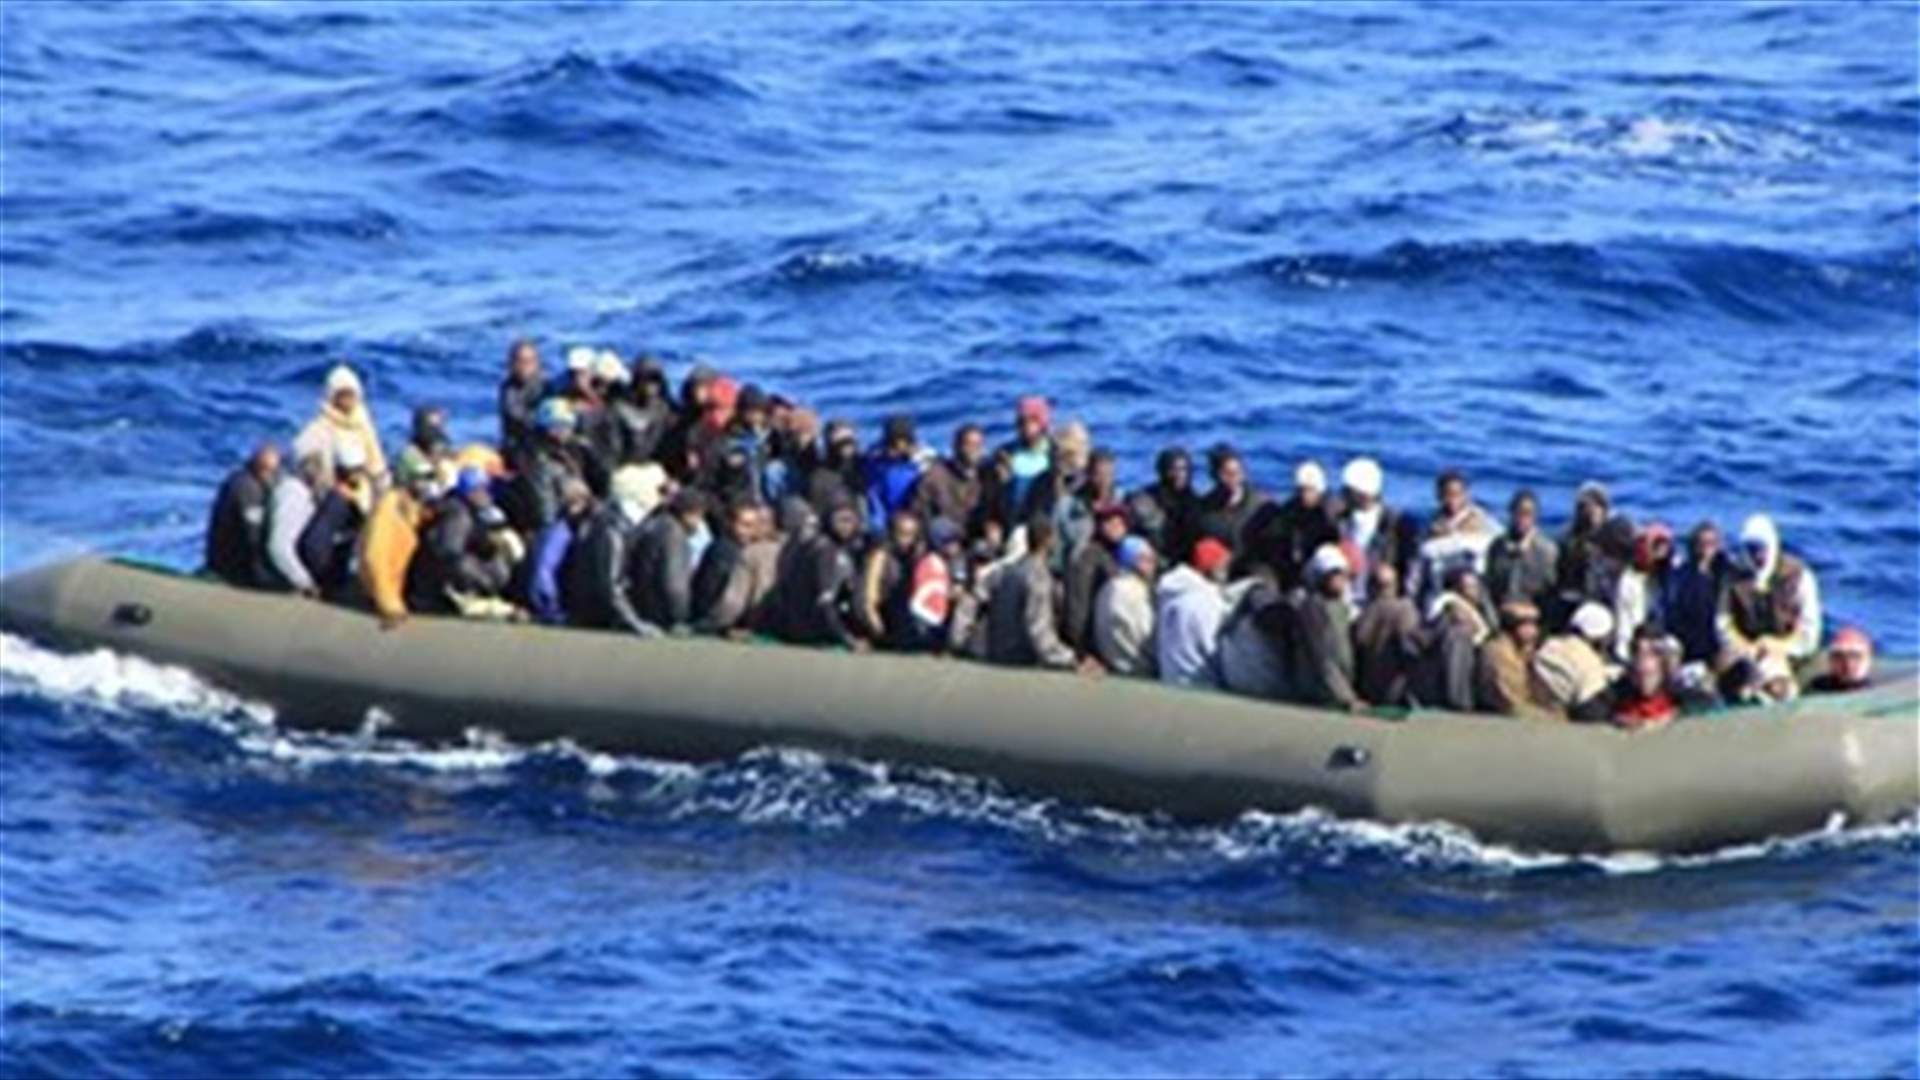 25 migrants found dead in rubber boat in Mediterranean